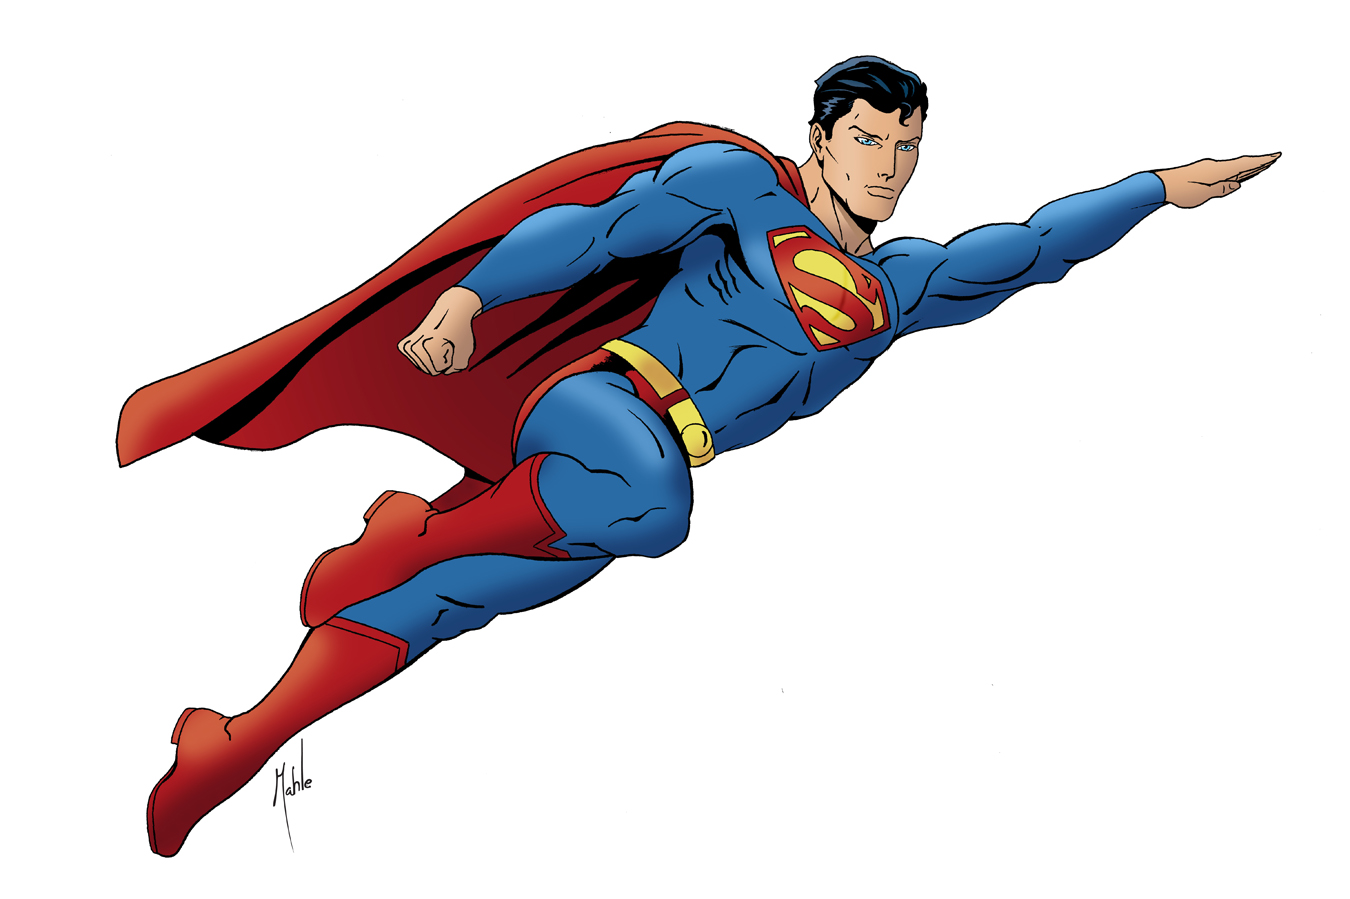 Cockham superheroes. Супермен Марвел. Супергерои Марвел Супермен. Супермен мультяшный. Супергерой летит.